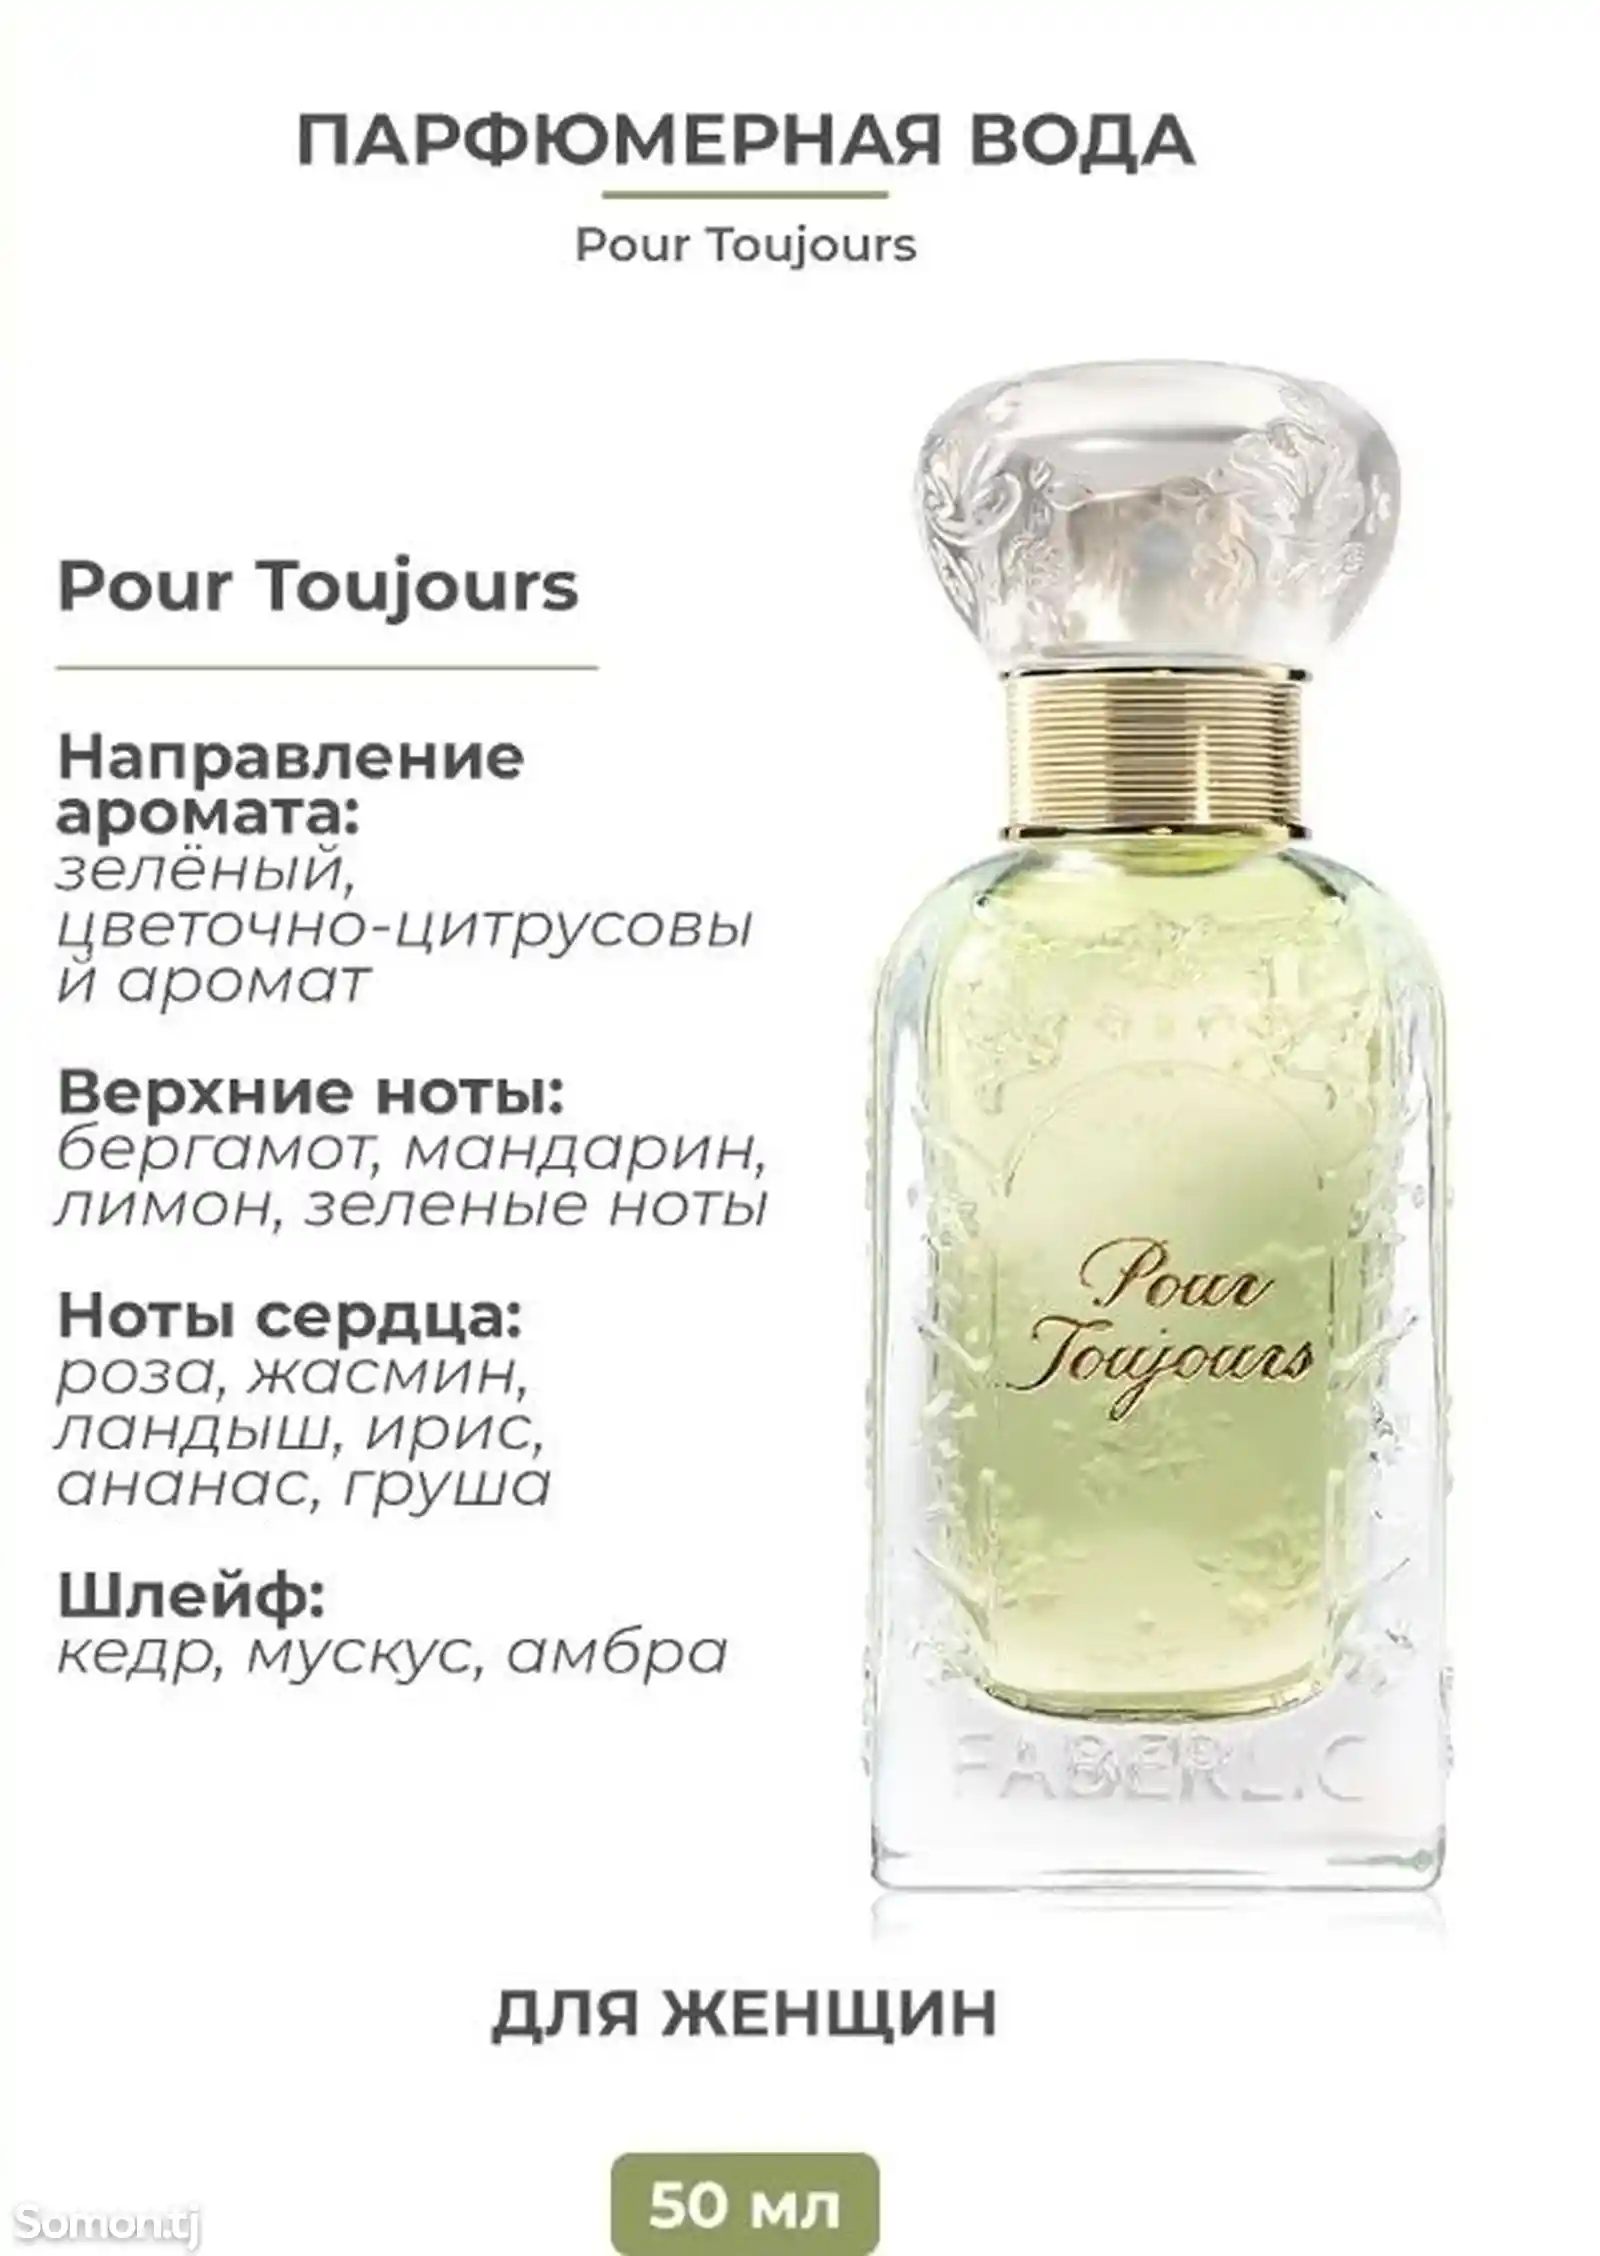 Парфюмерная вода для женщин Pour Toujours-1